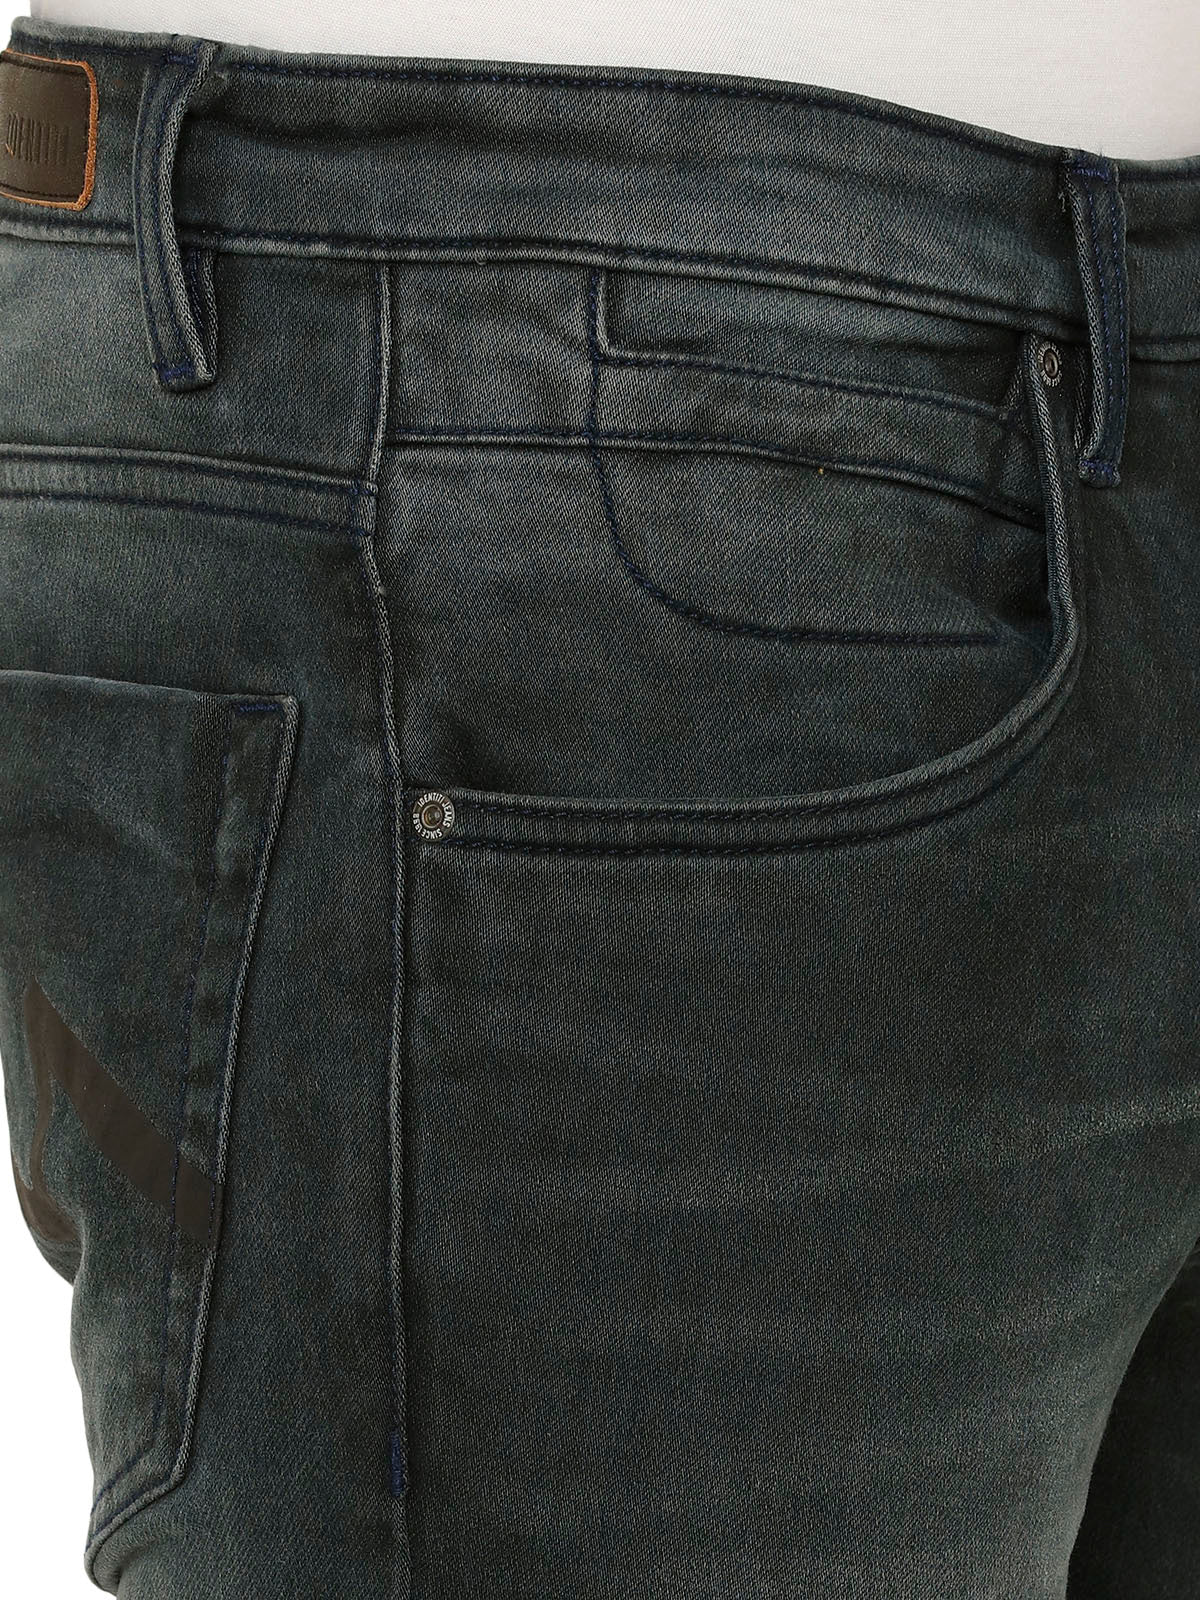 Men Black Tint 218 Slim Fit Low-Mid-Rise Clean Look Stretchable Jeans